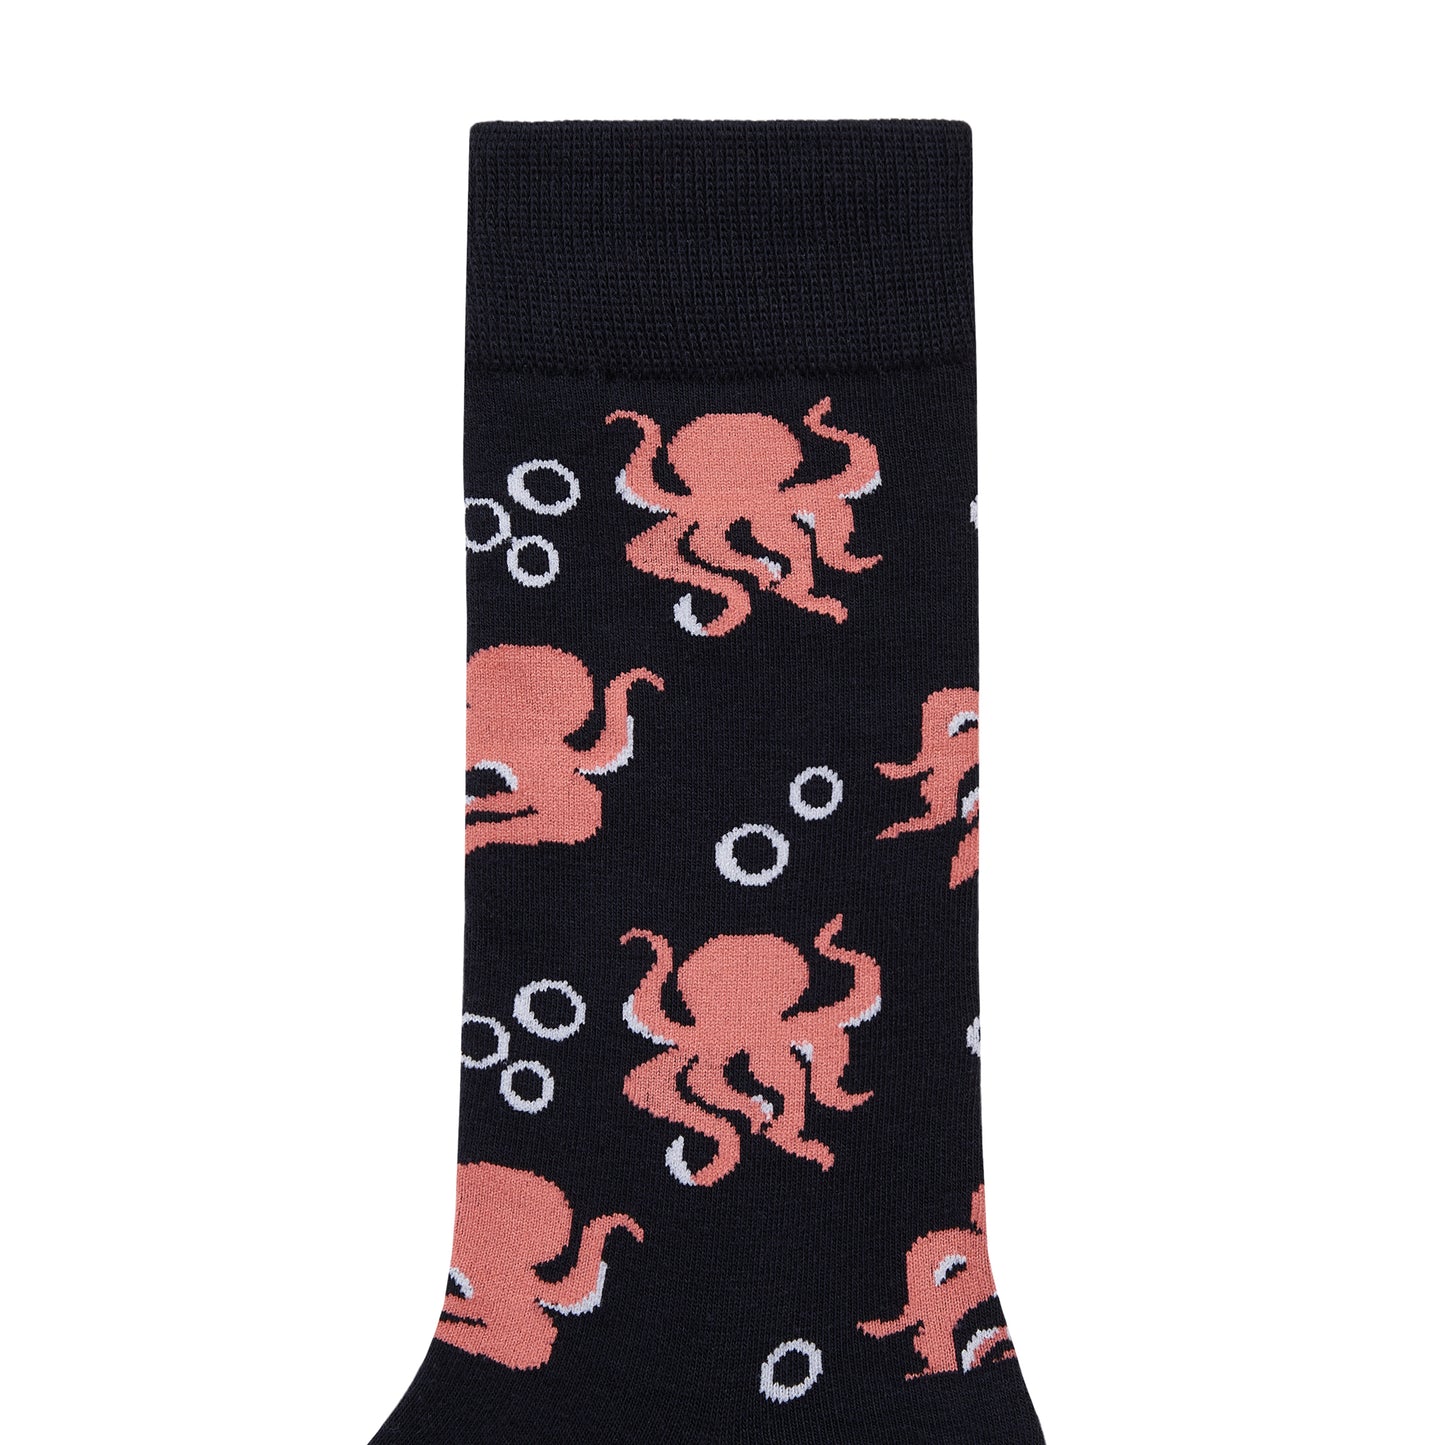 Octopus Printed Crew Length Socks - IDENTITY Apparel Shop